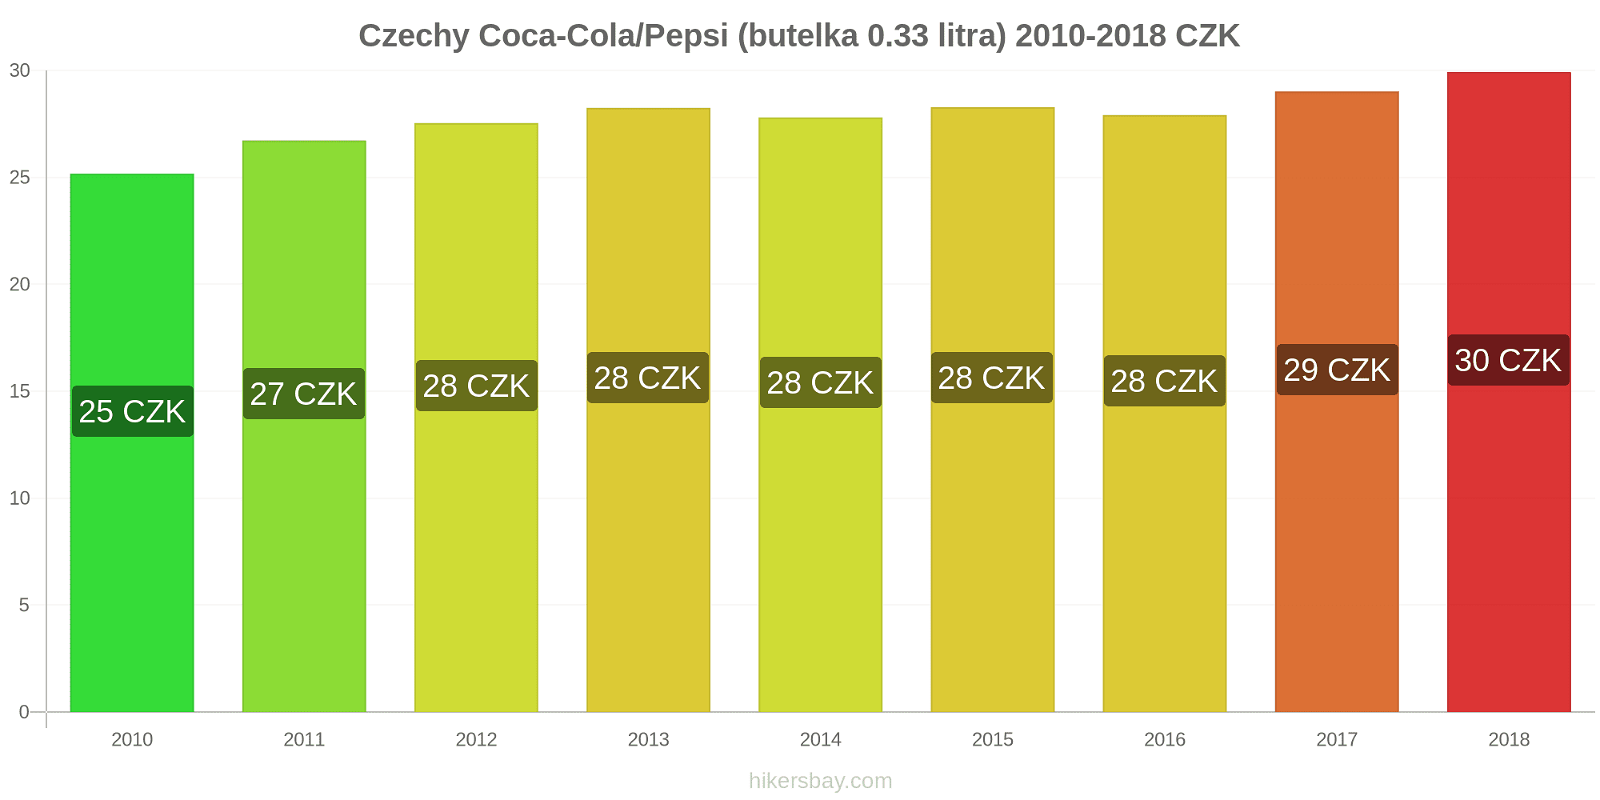 Czechy zmiany cen Coca-Cola/Pepsi (butelka 0.33 litra) hikersbay.com